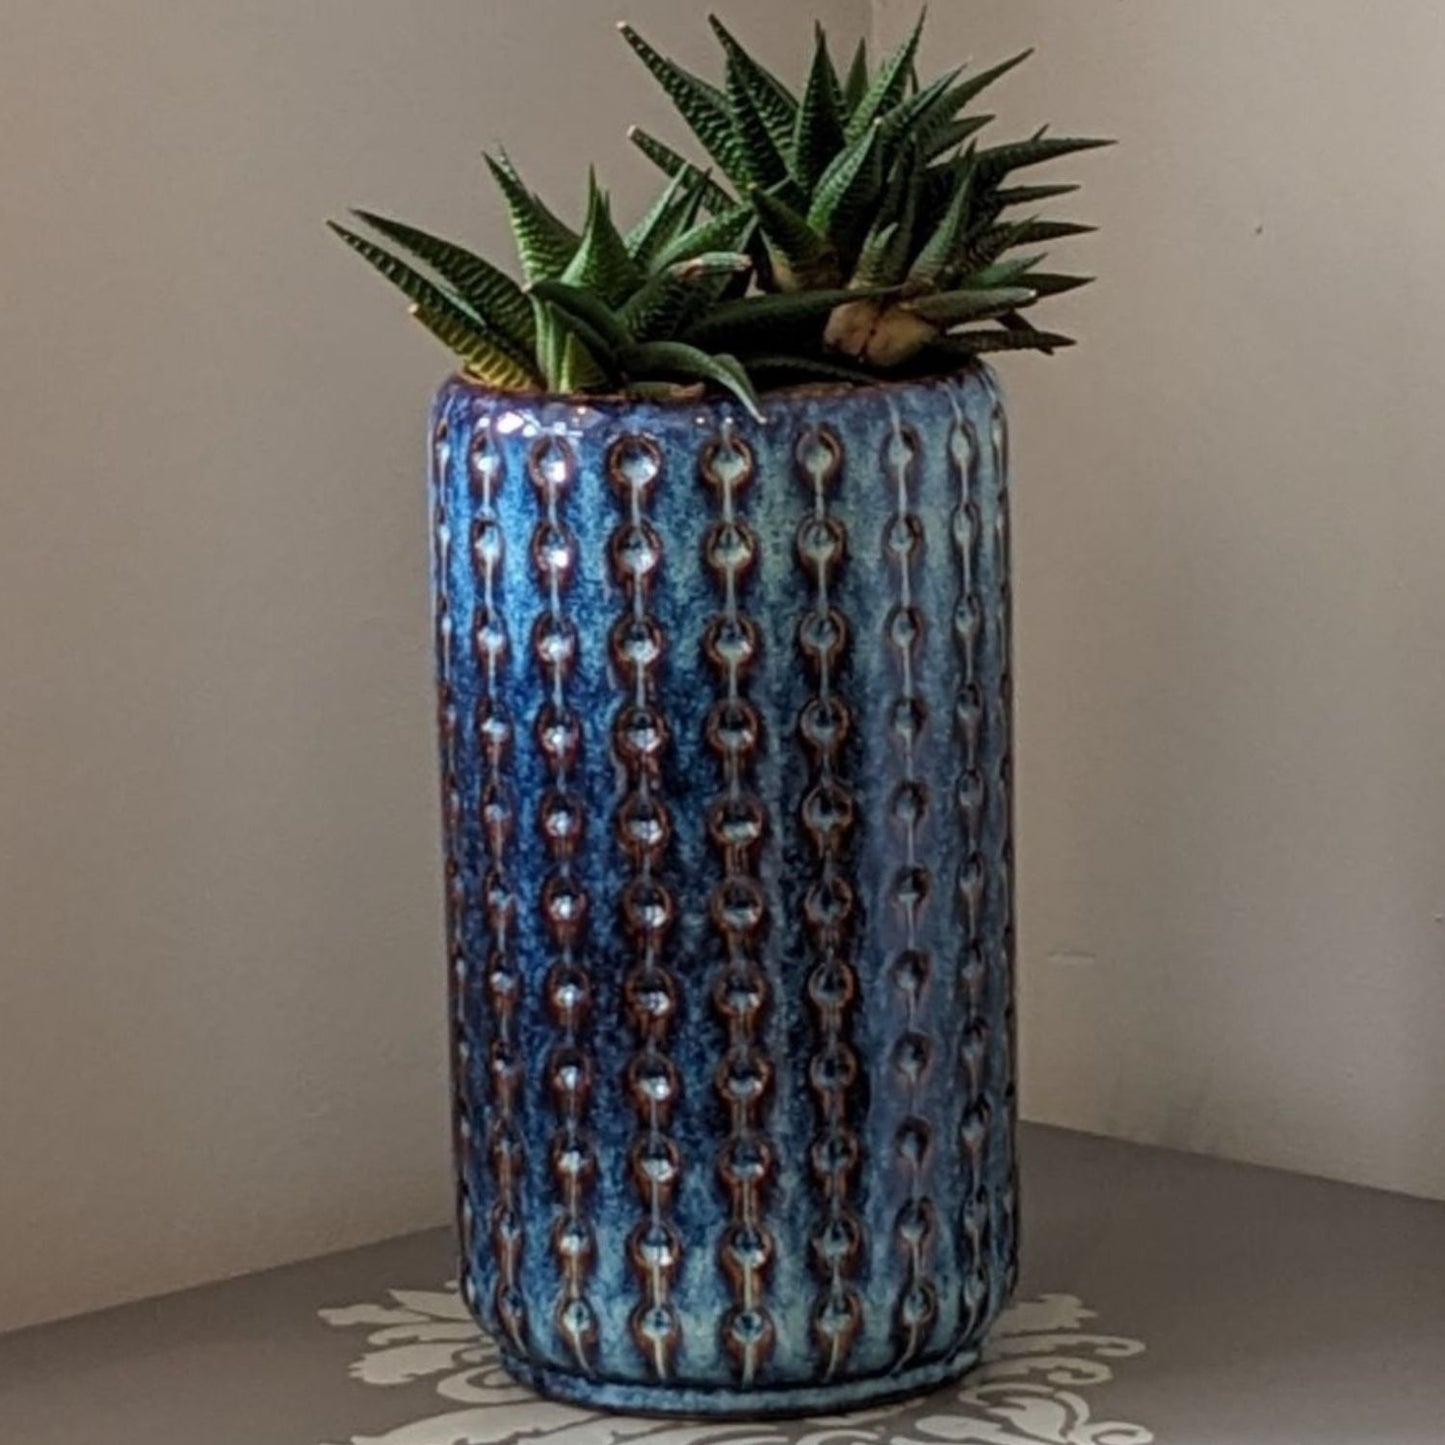 Blue planter pot made of cermaic named IndigoBloom